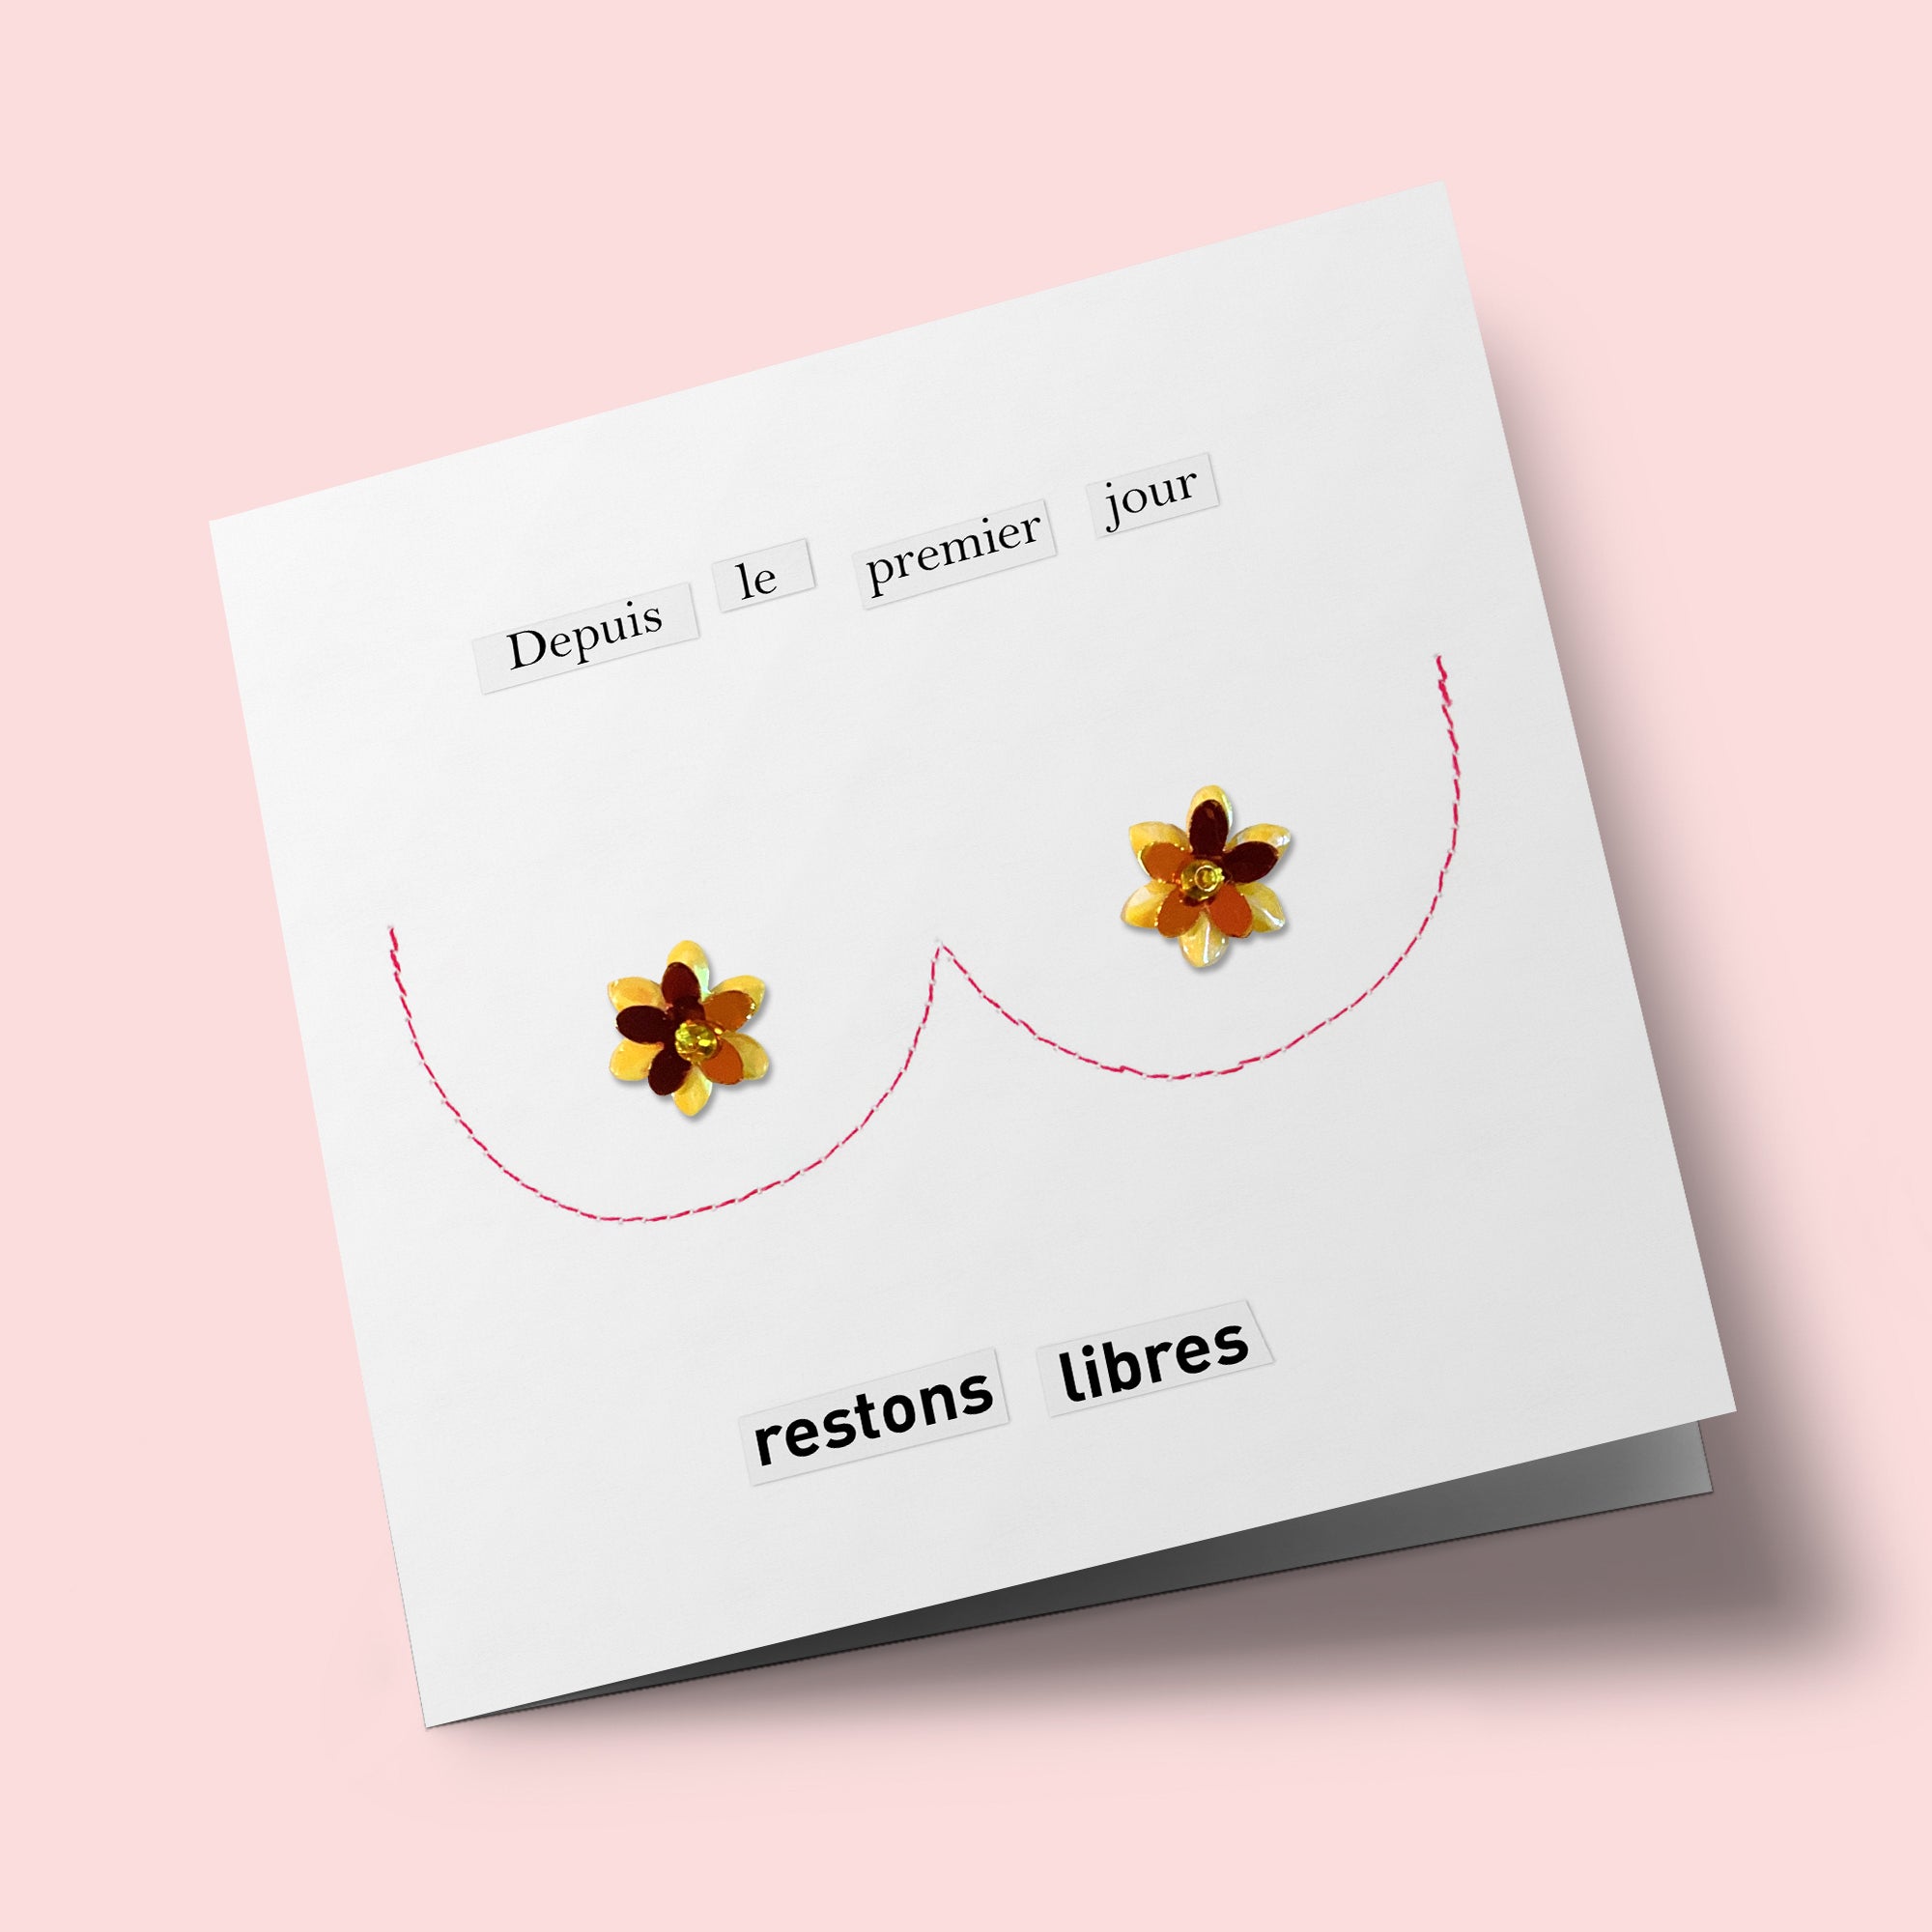 Rosebuds - "Restons libres" - embroidered card